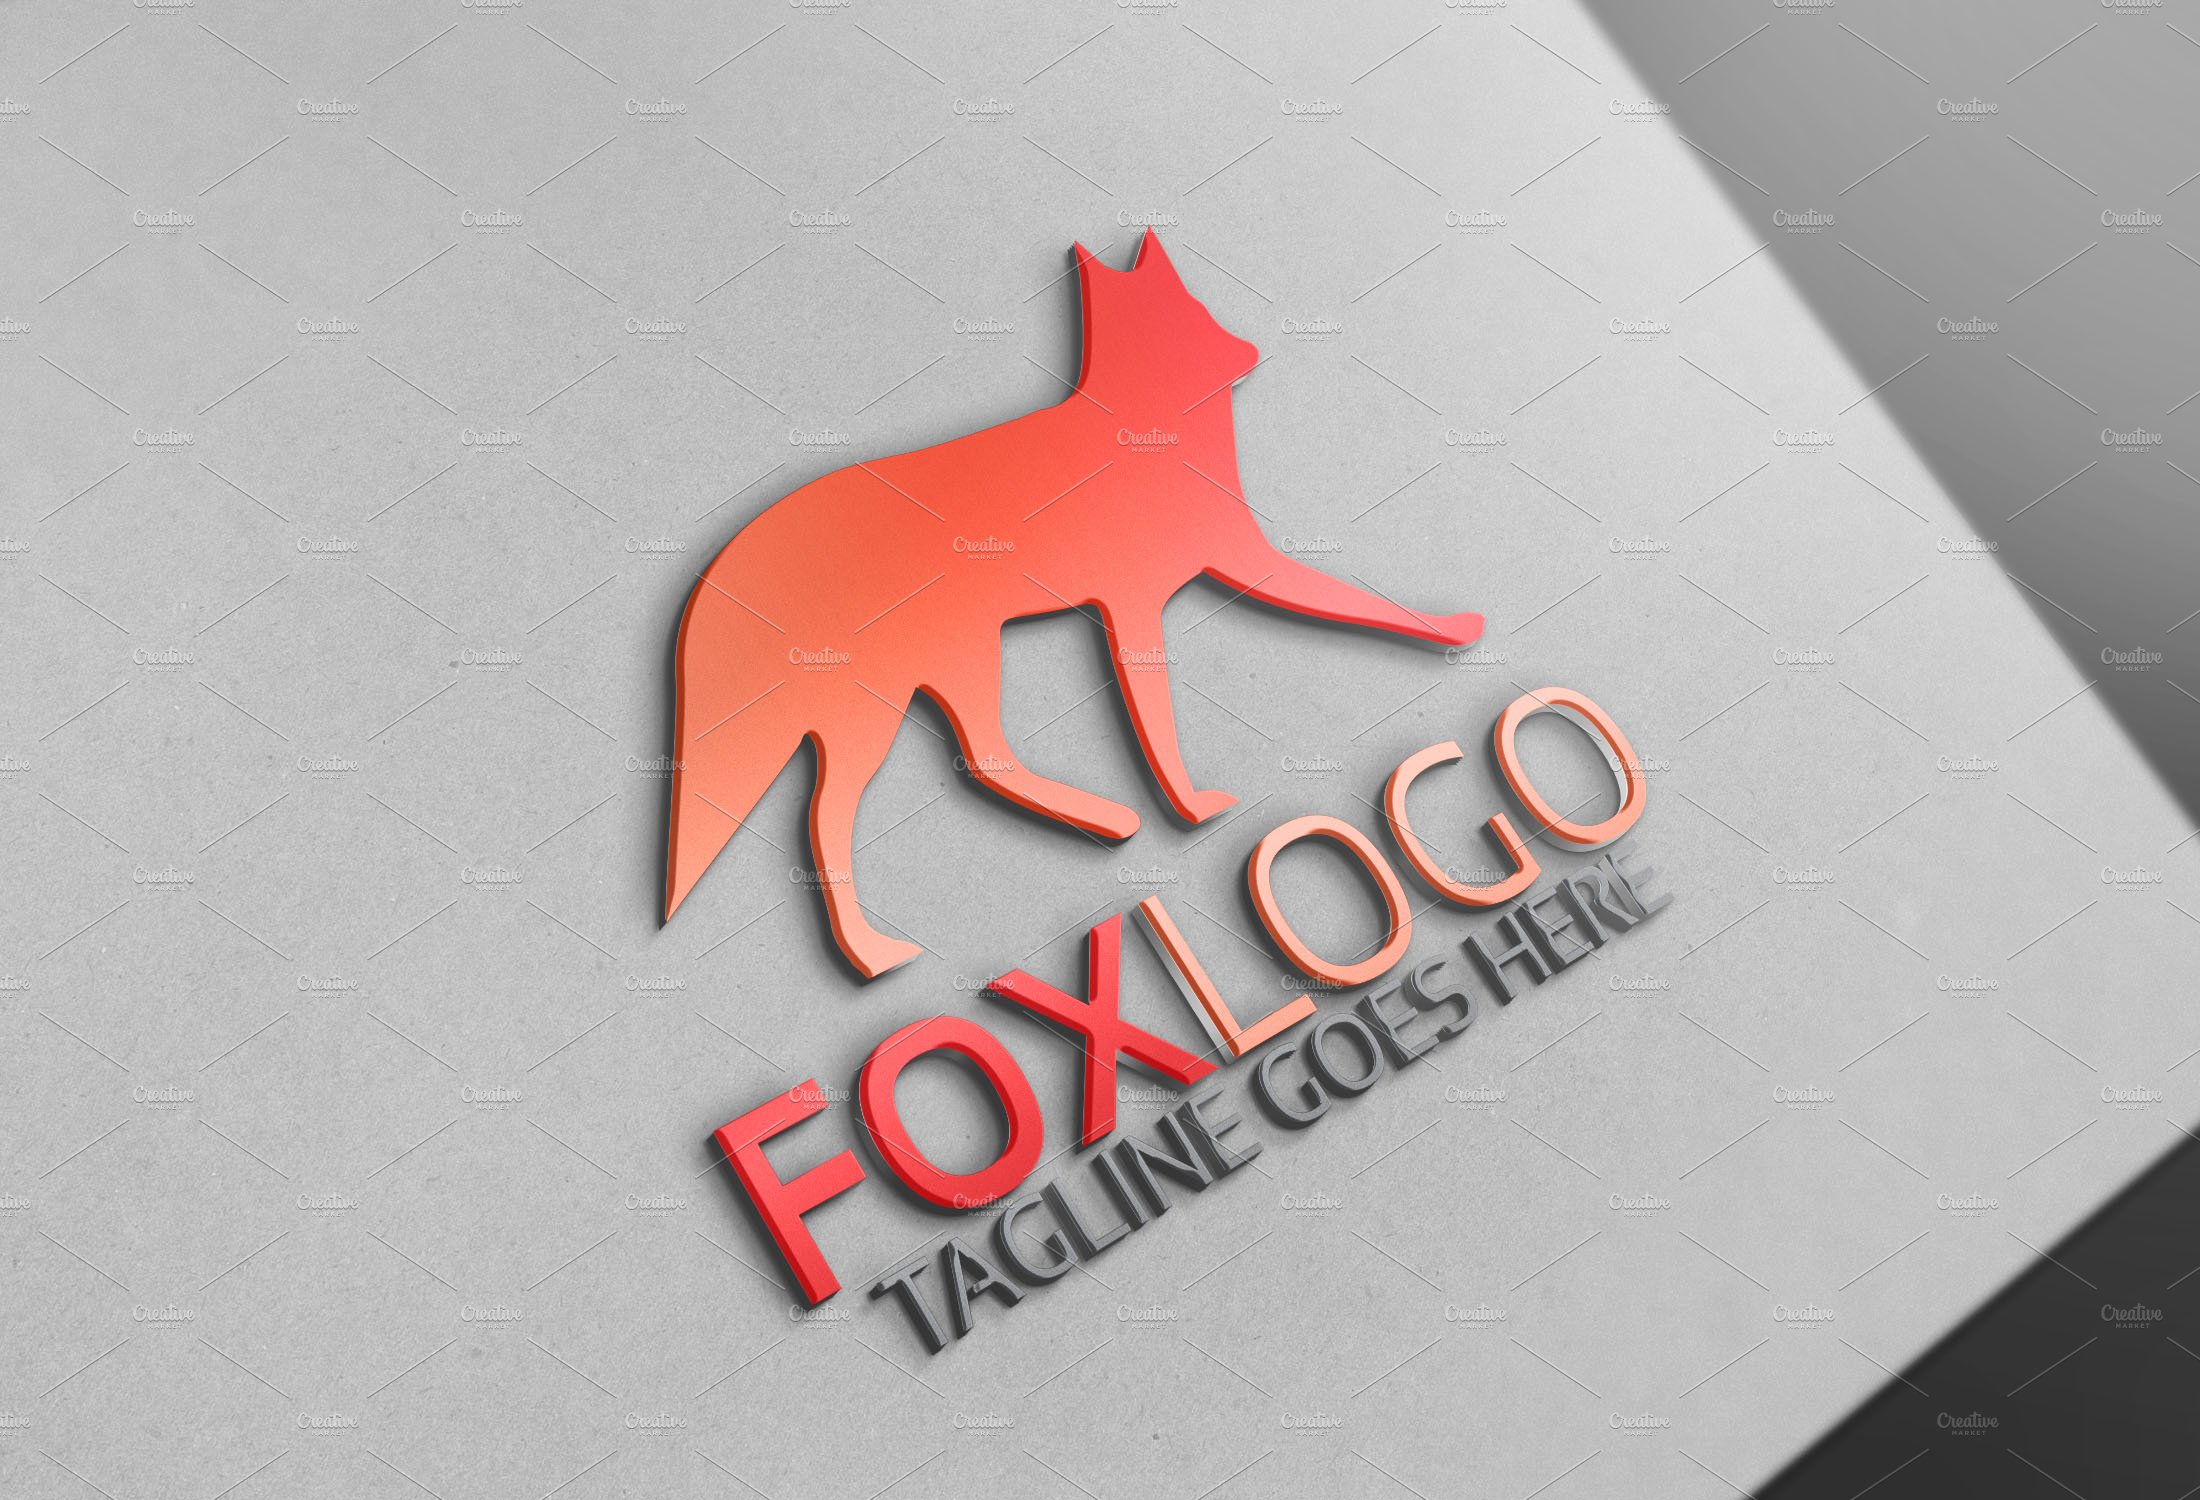 Fox Logo preview image.